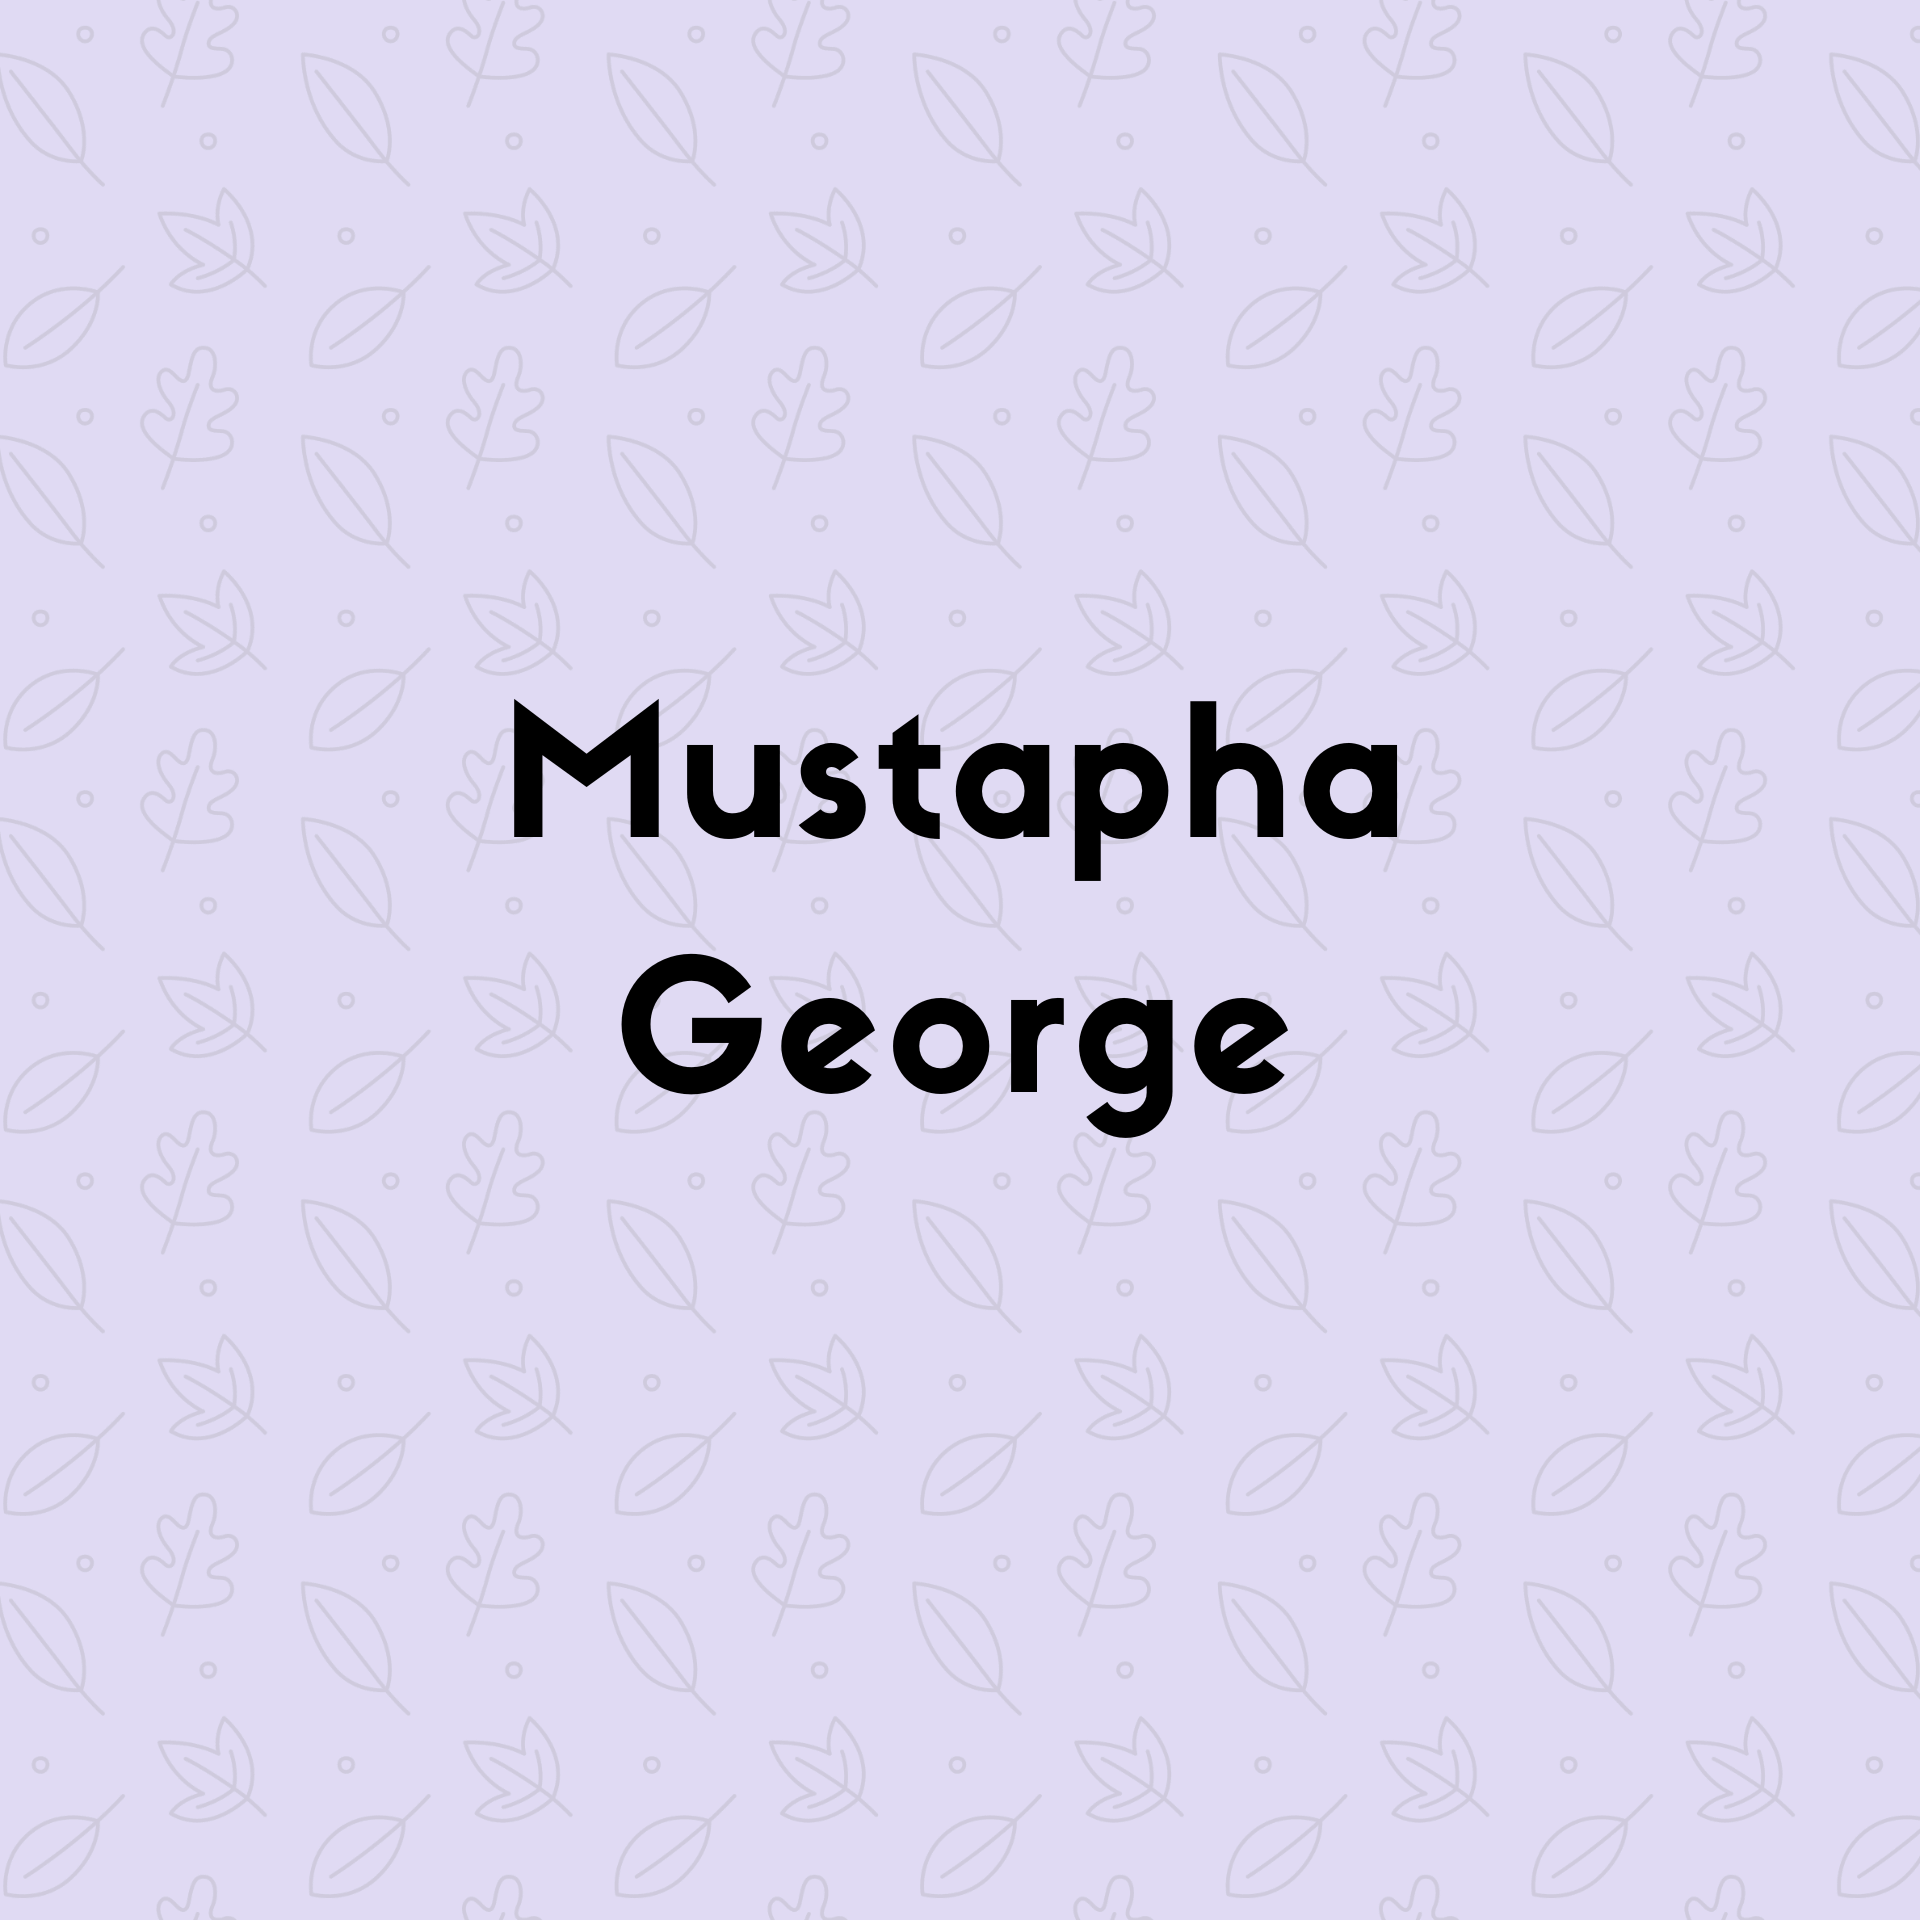  Mustapha George